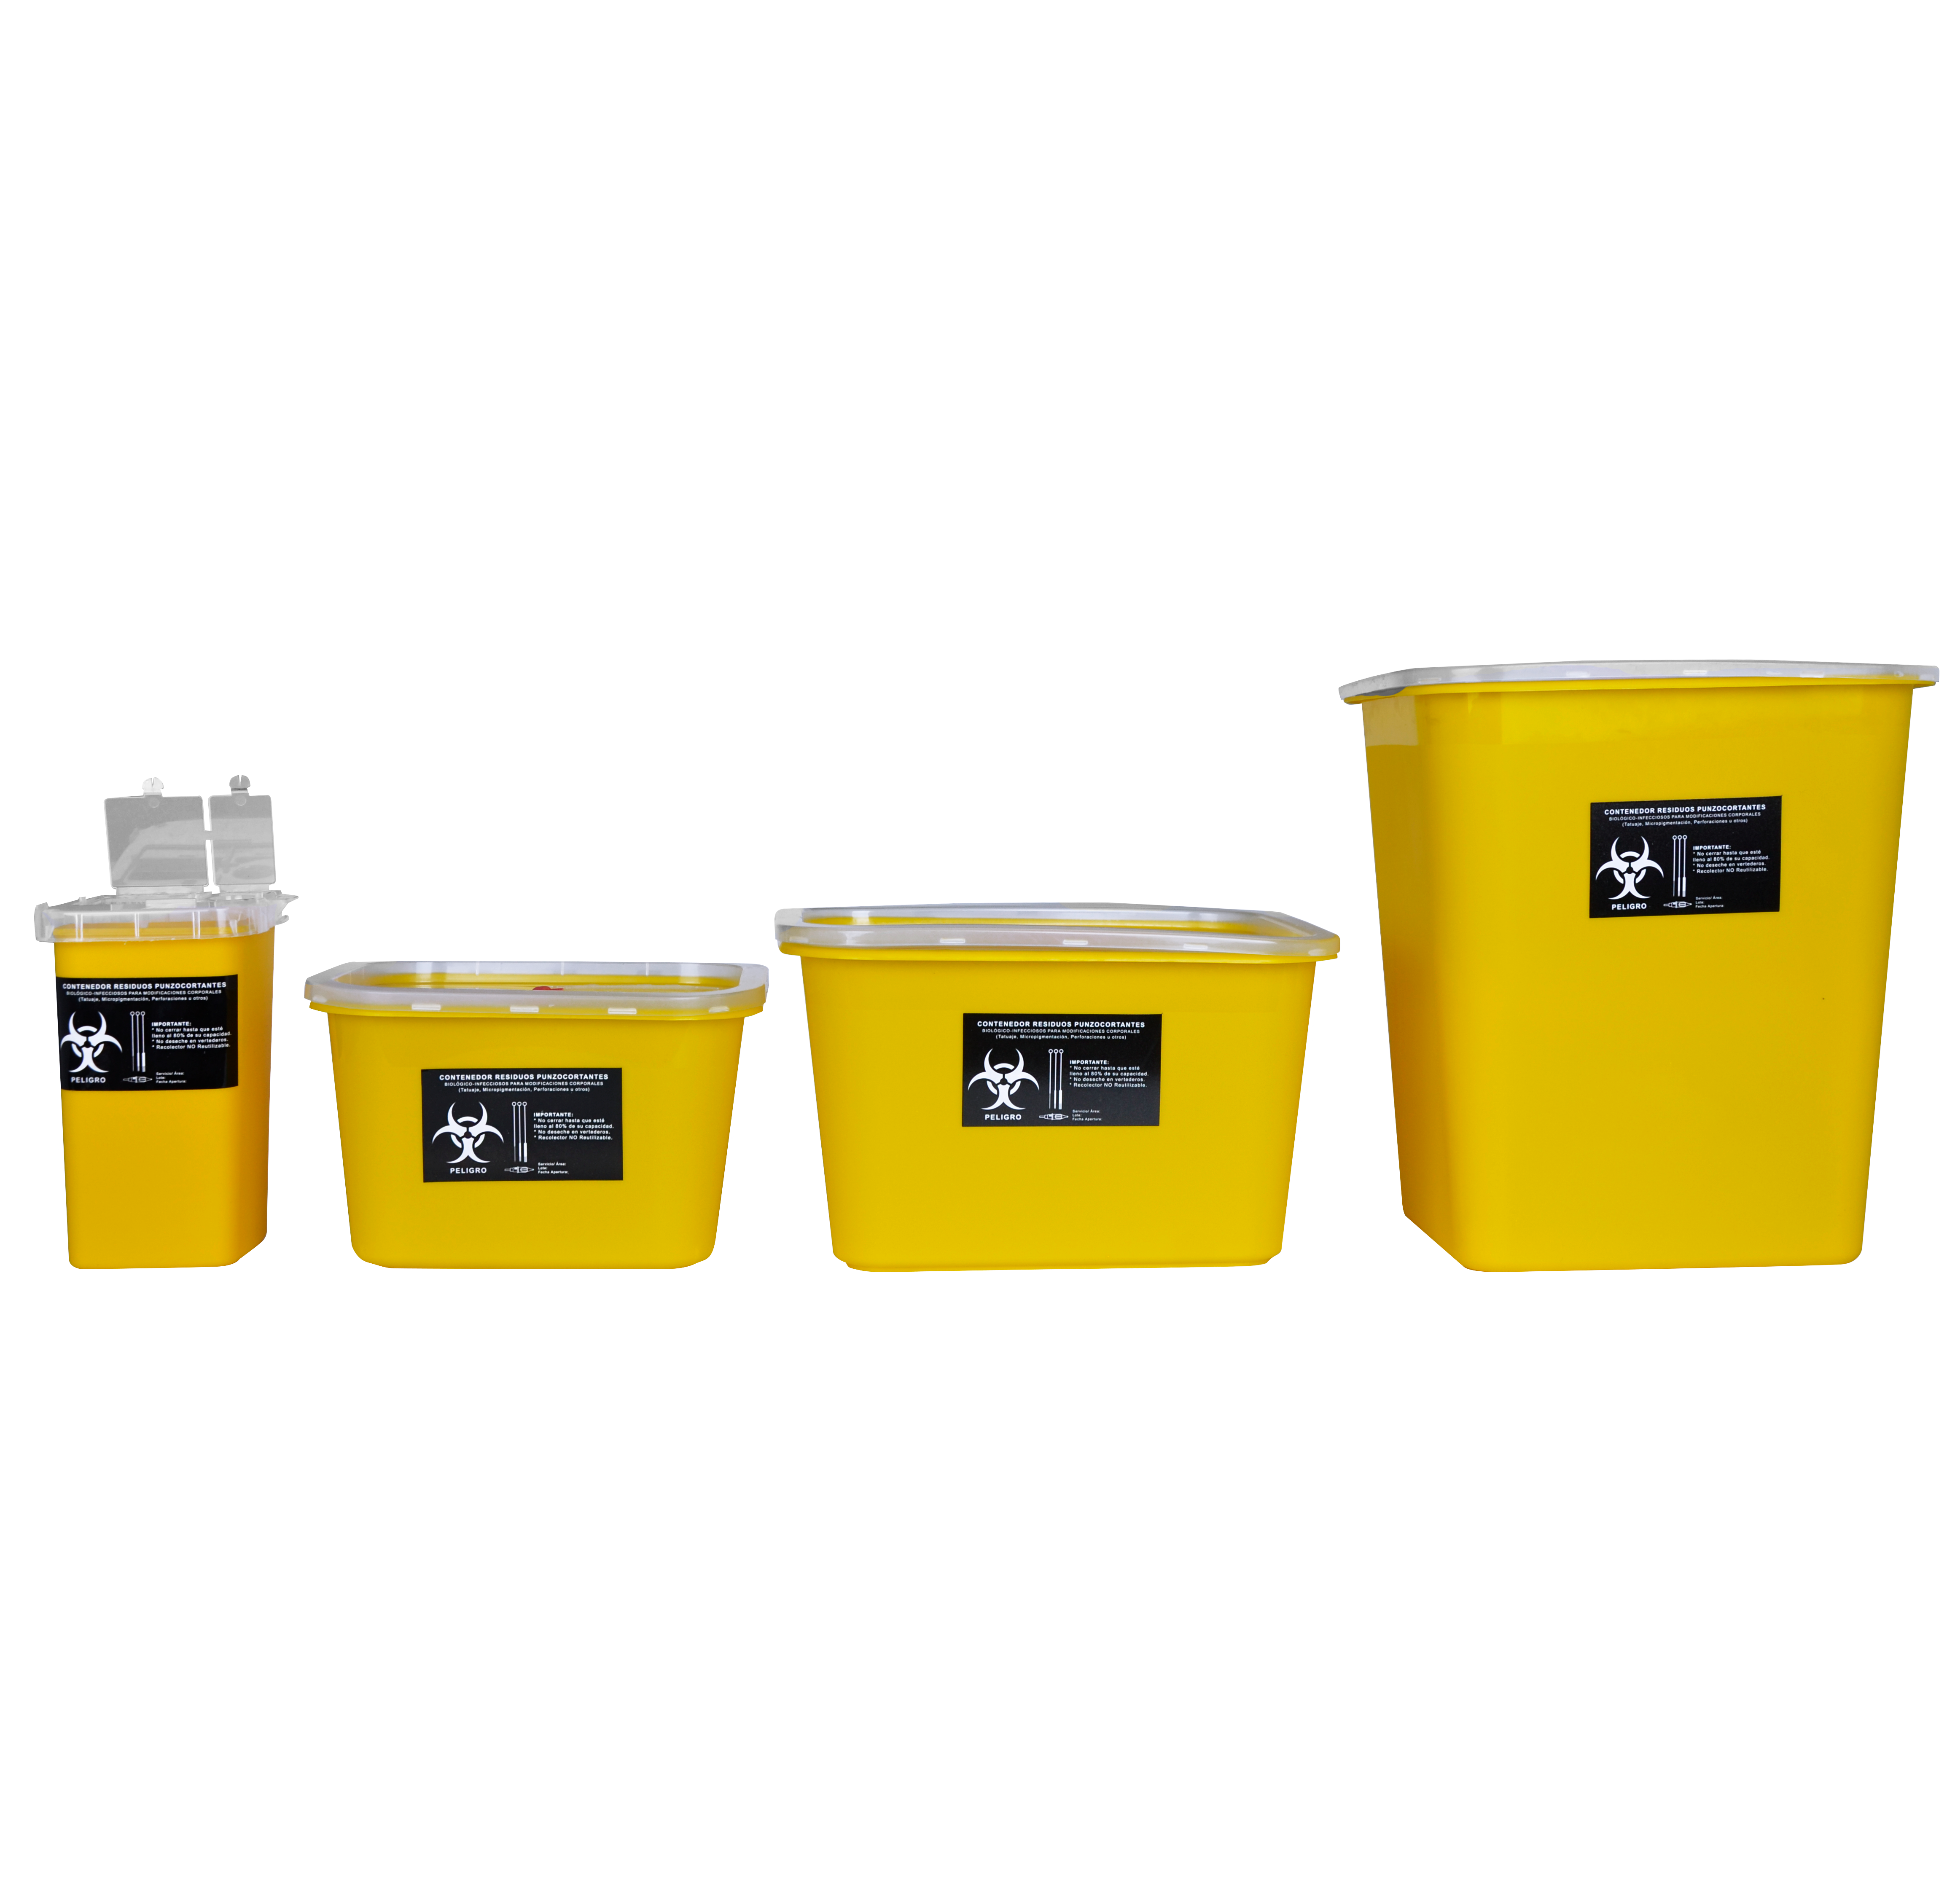 Contenedor Papelera PP reciclaje 80 litros en color amarillo - Zeta Trades  S.L.U.